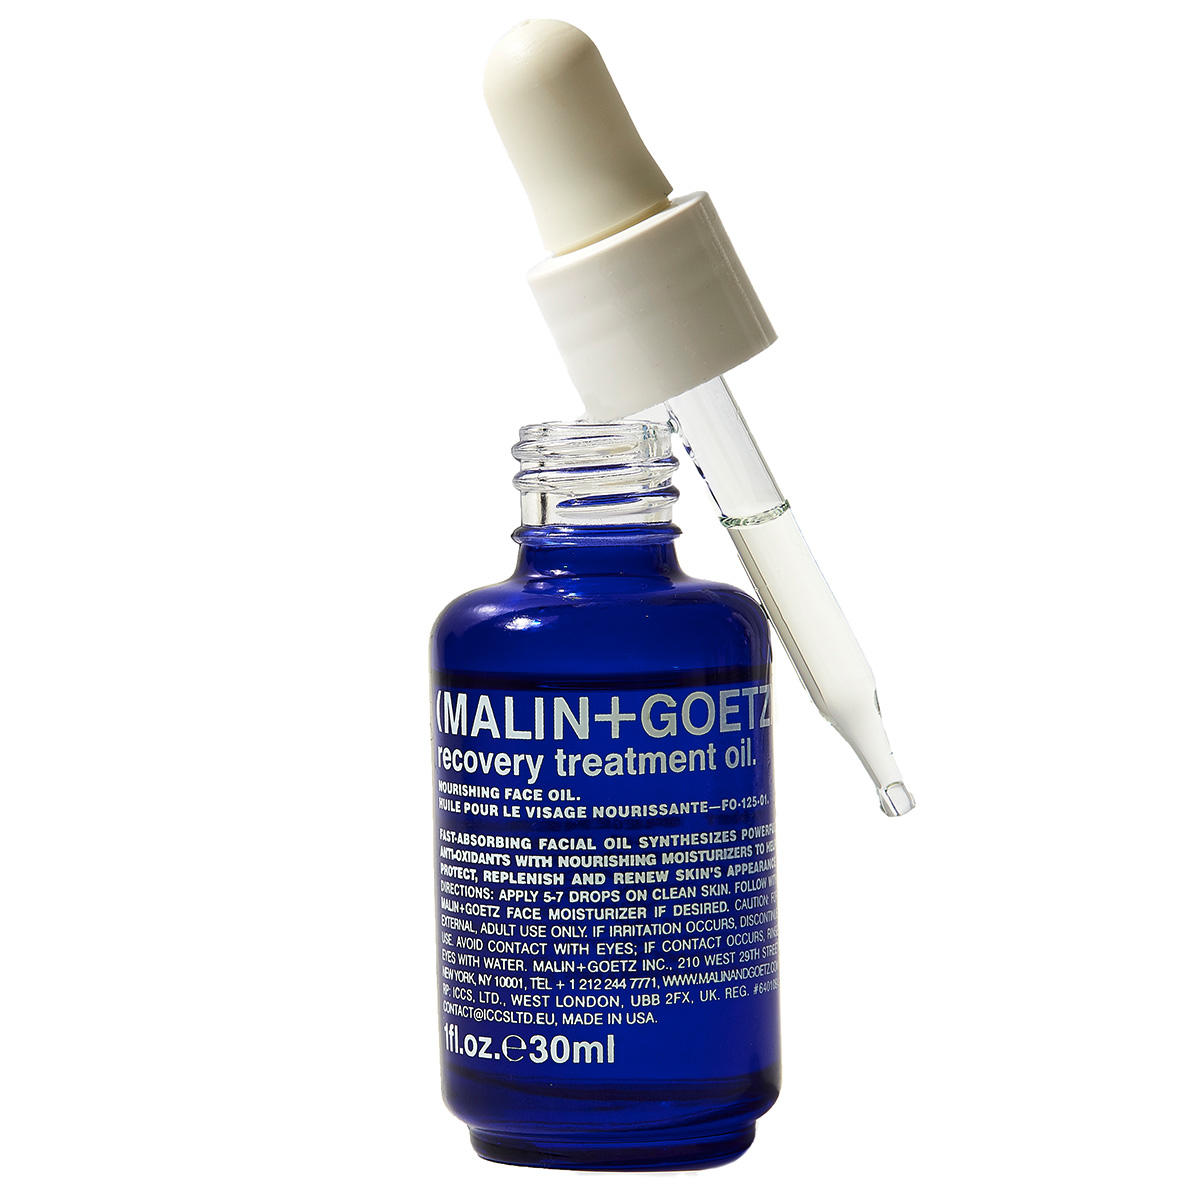 (MALIN+GOETZ) Recovery Treatment Oil 30 ml - 2